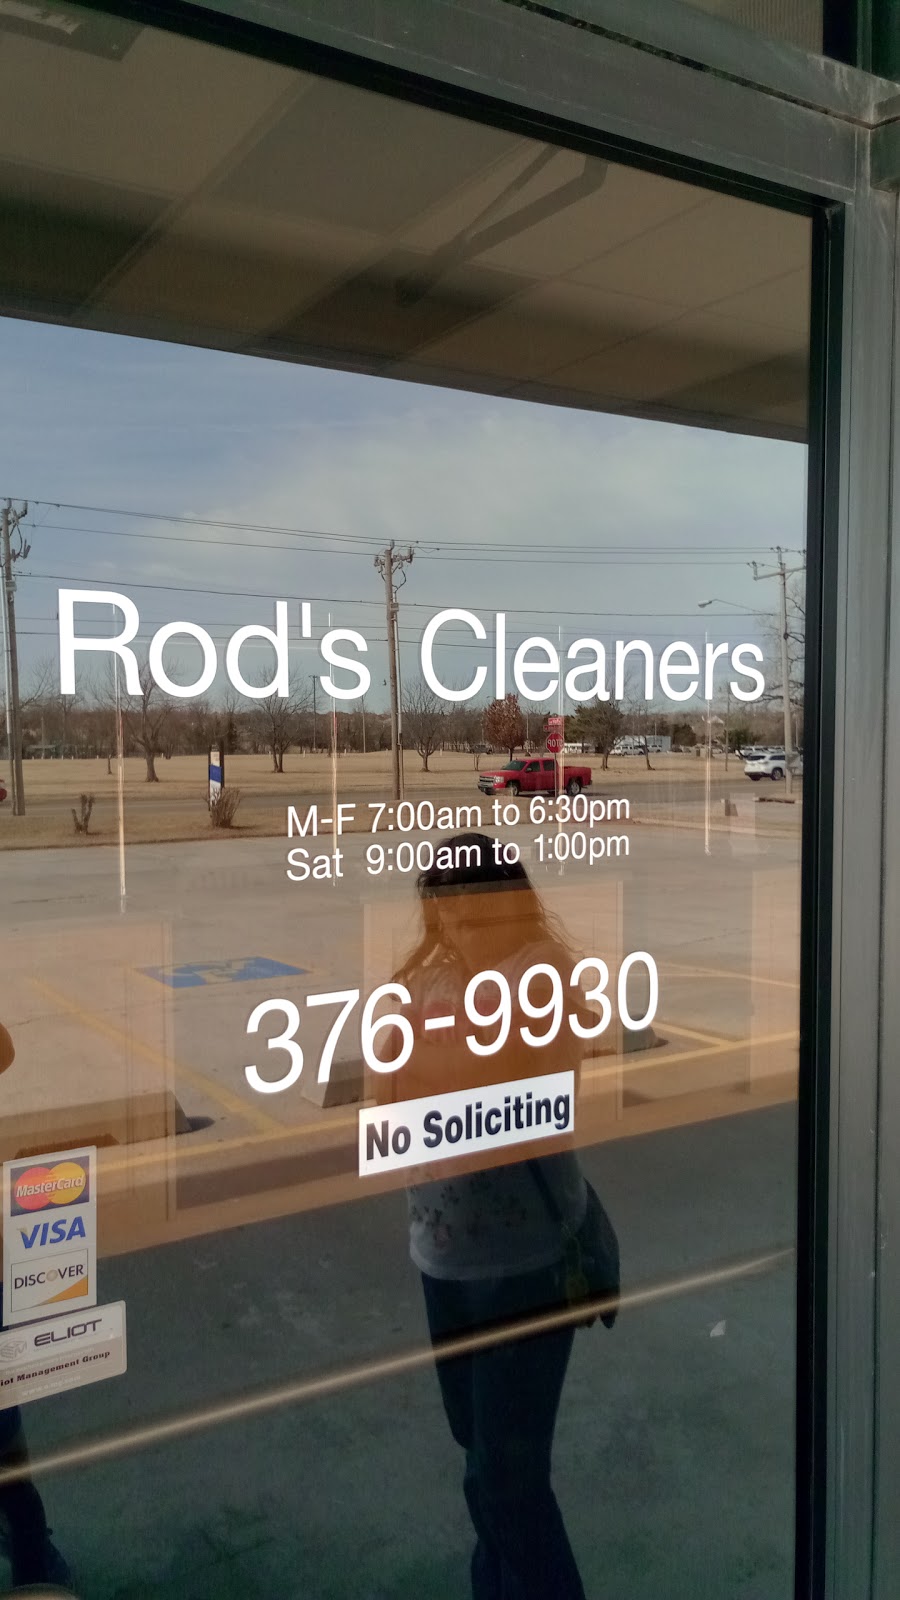 Rods Cleaners | 635 N Mustang Rd, Mustang, OK 73064 | Phone: (405) 376-9930